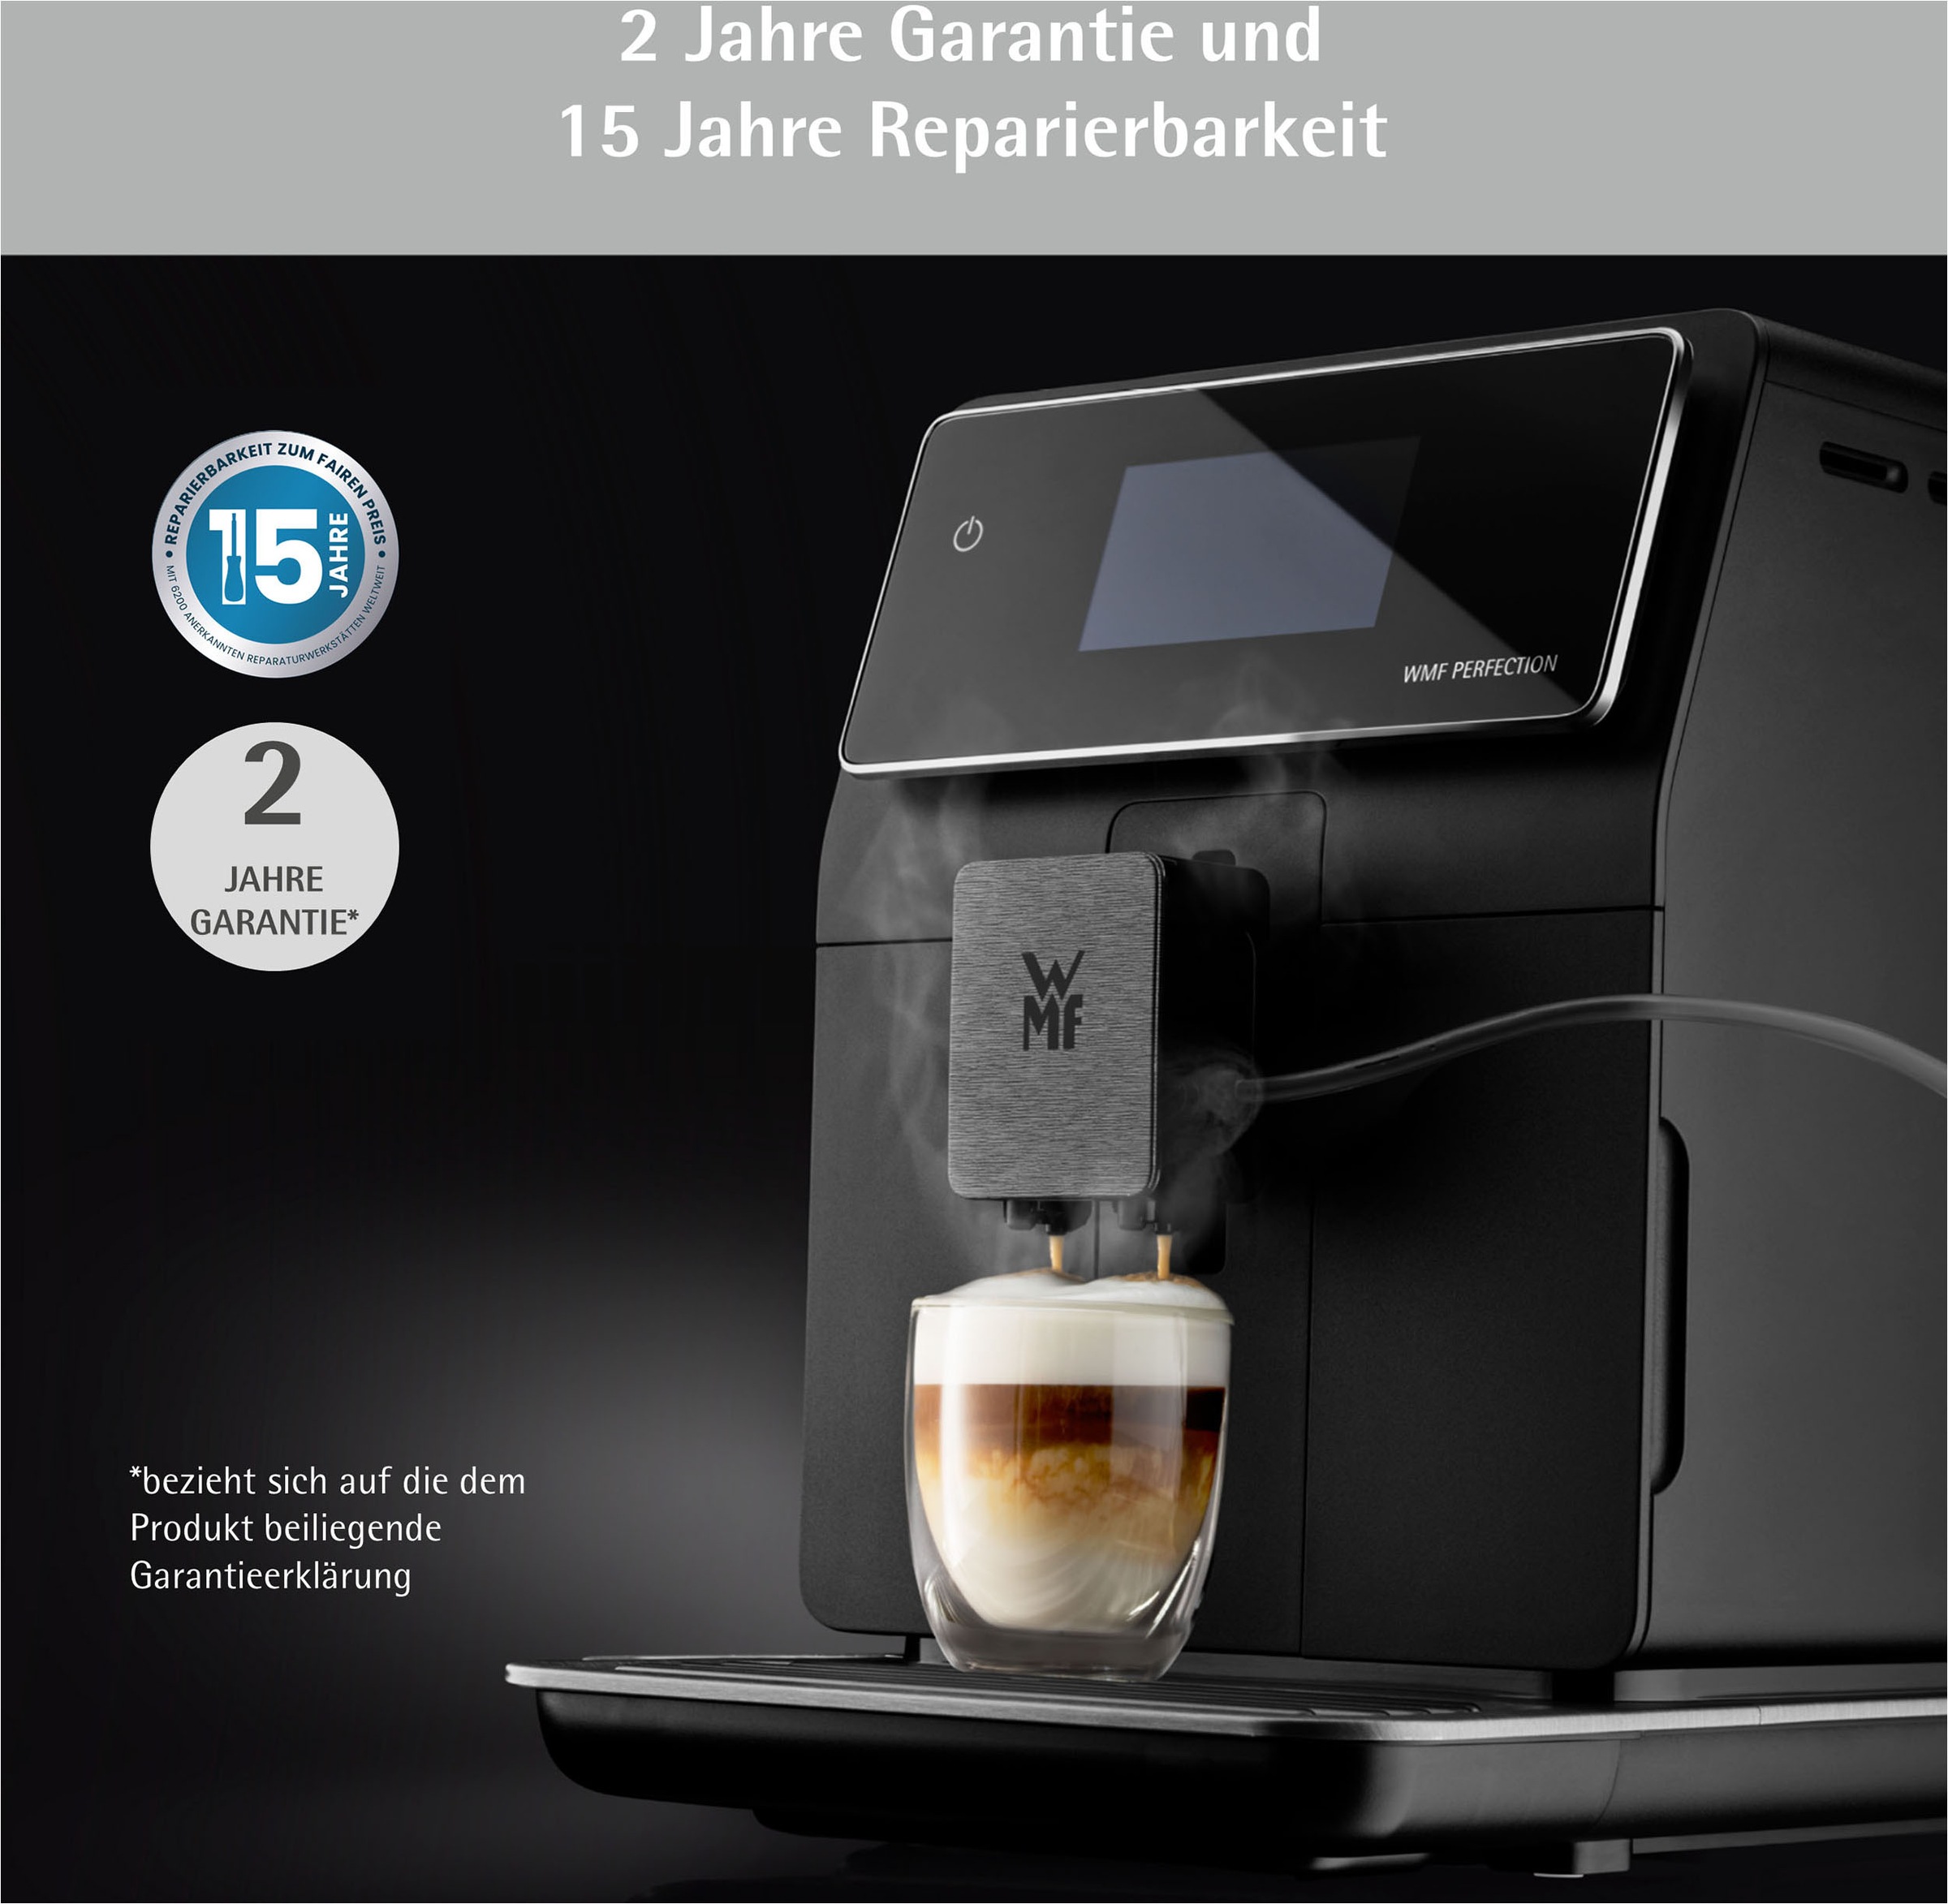 WMF Kaffeevollautomat »Perfection 890L CP855815«, intuitive Benutzeroberfläche, perfekter Milchschaum, selbstreinigend